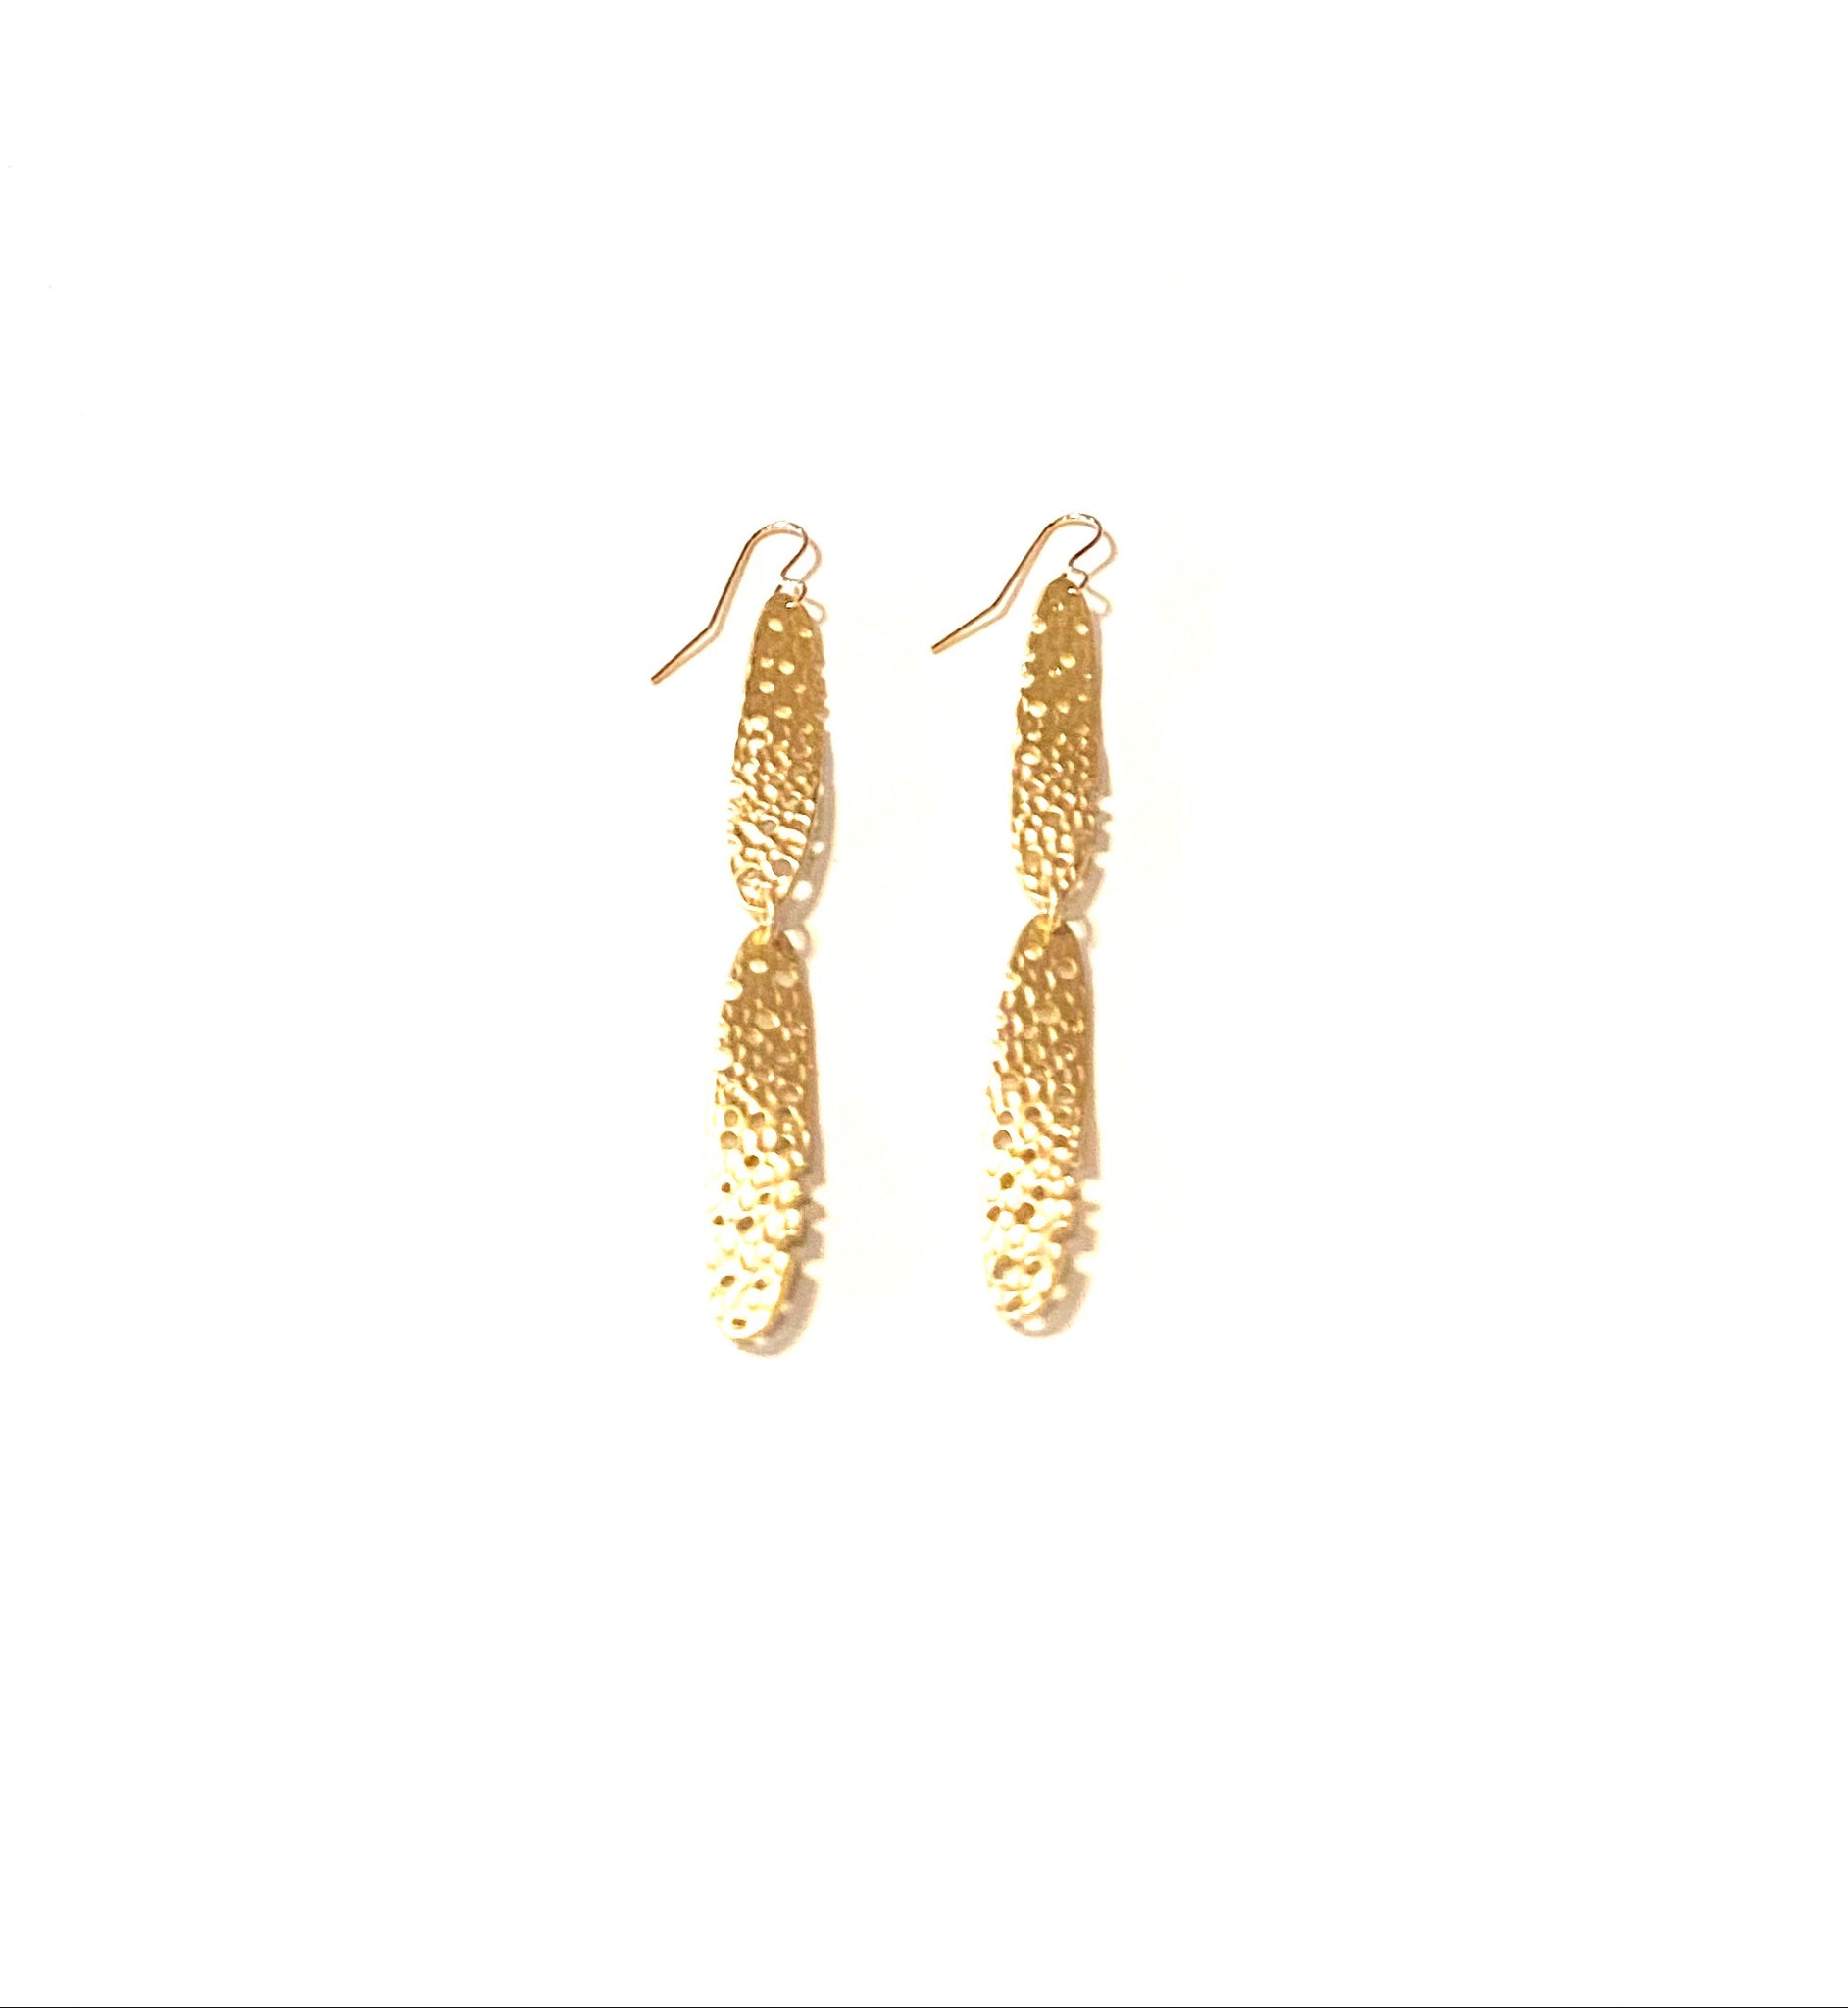 Megan - earrings with gold twist